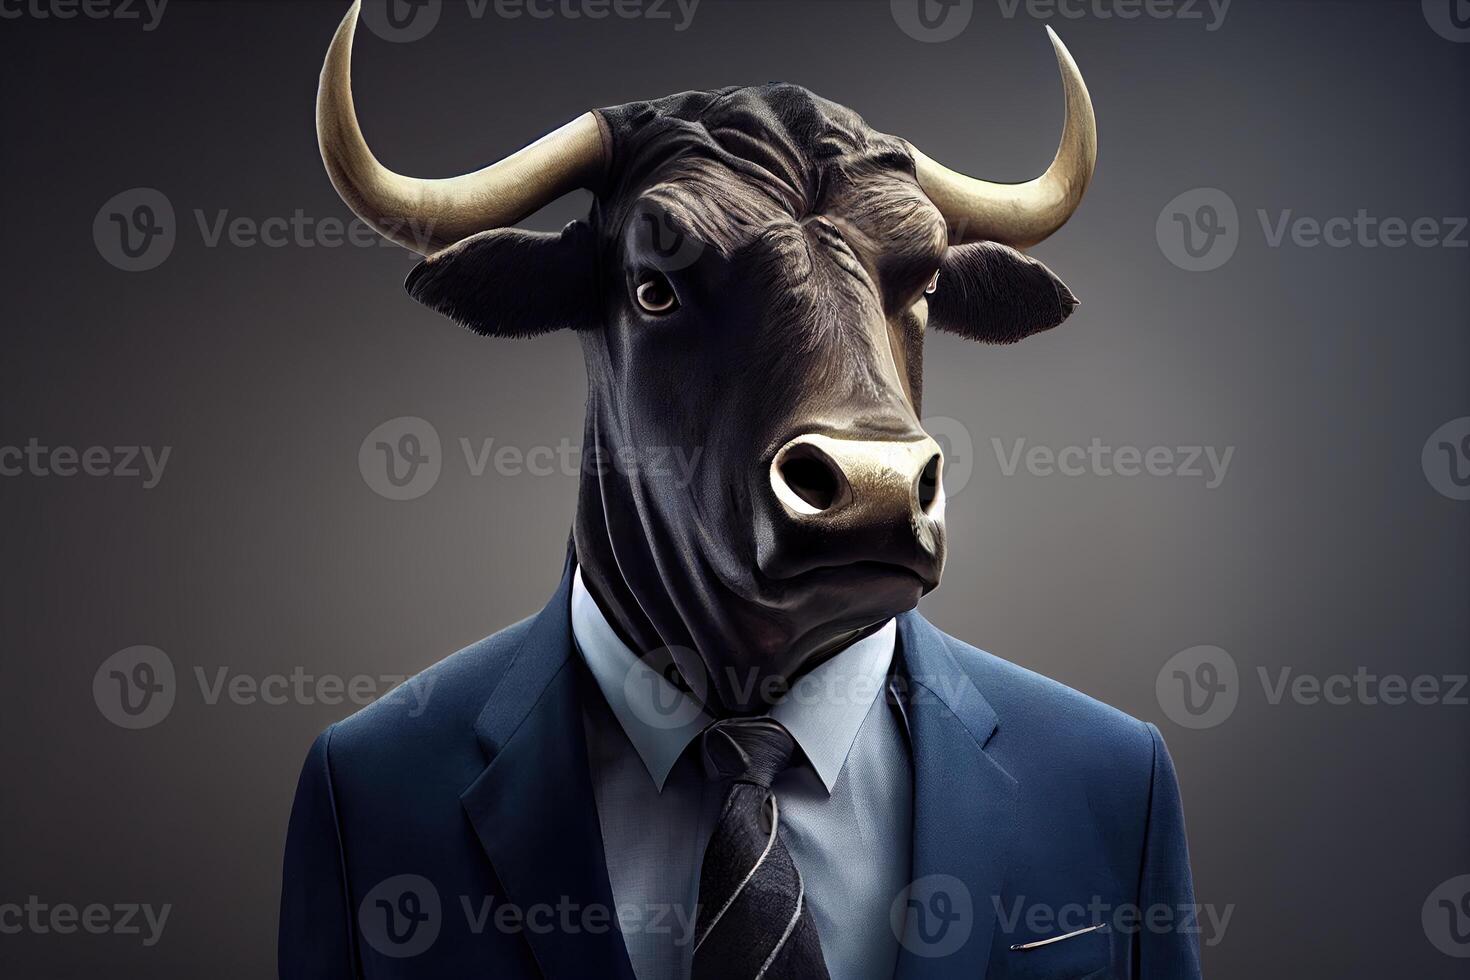 Bull in business office suit portrait. Bull market, stock market, photo